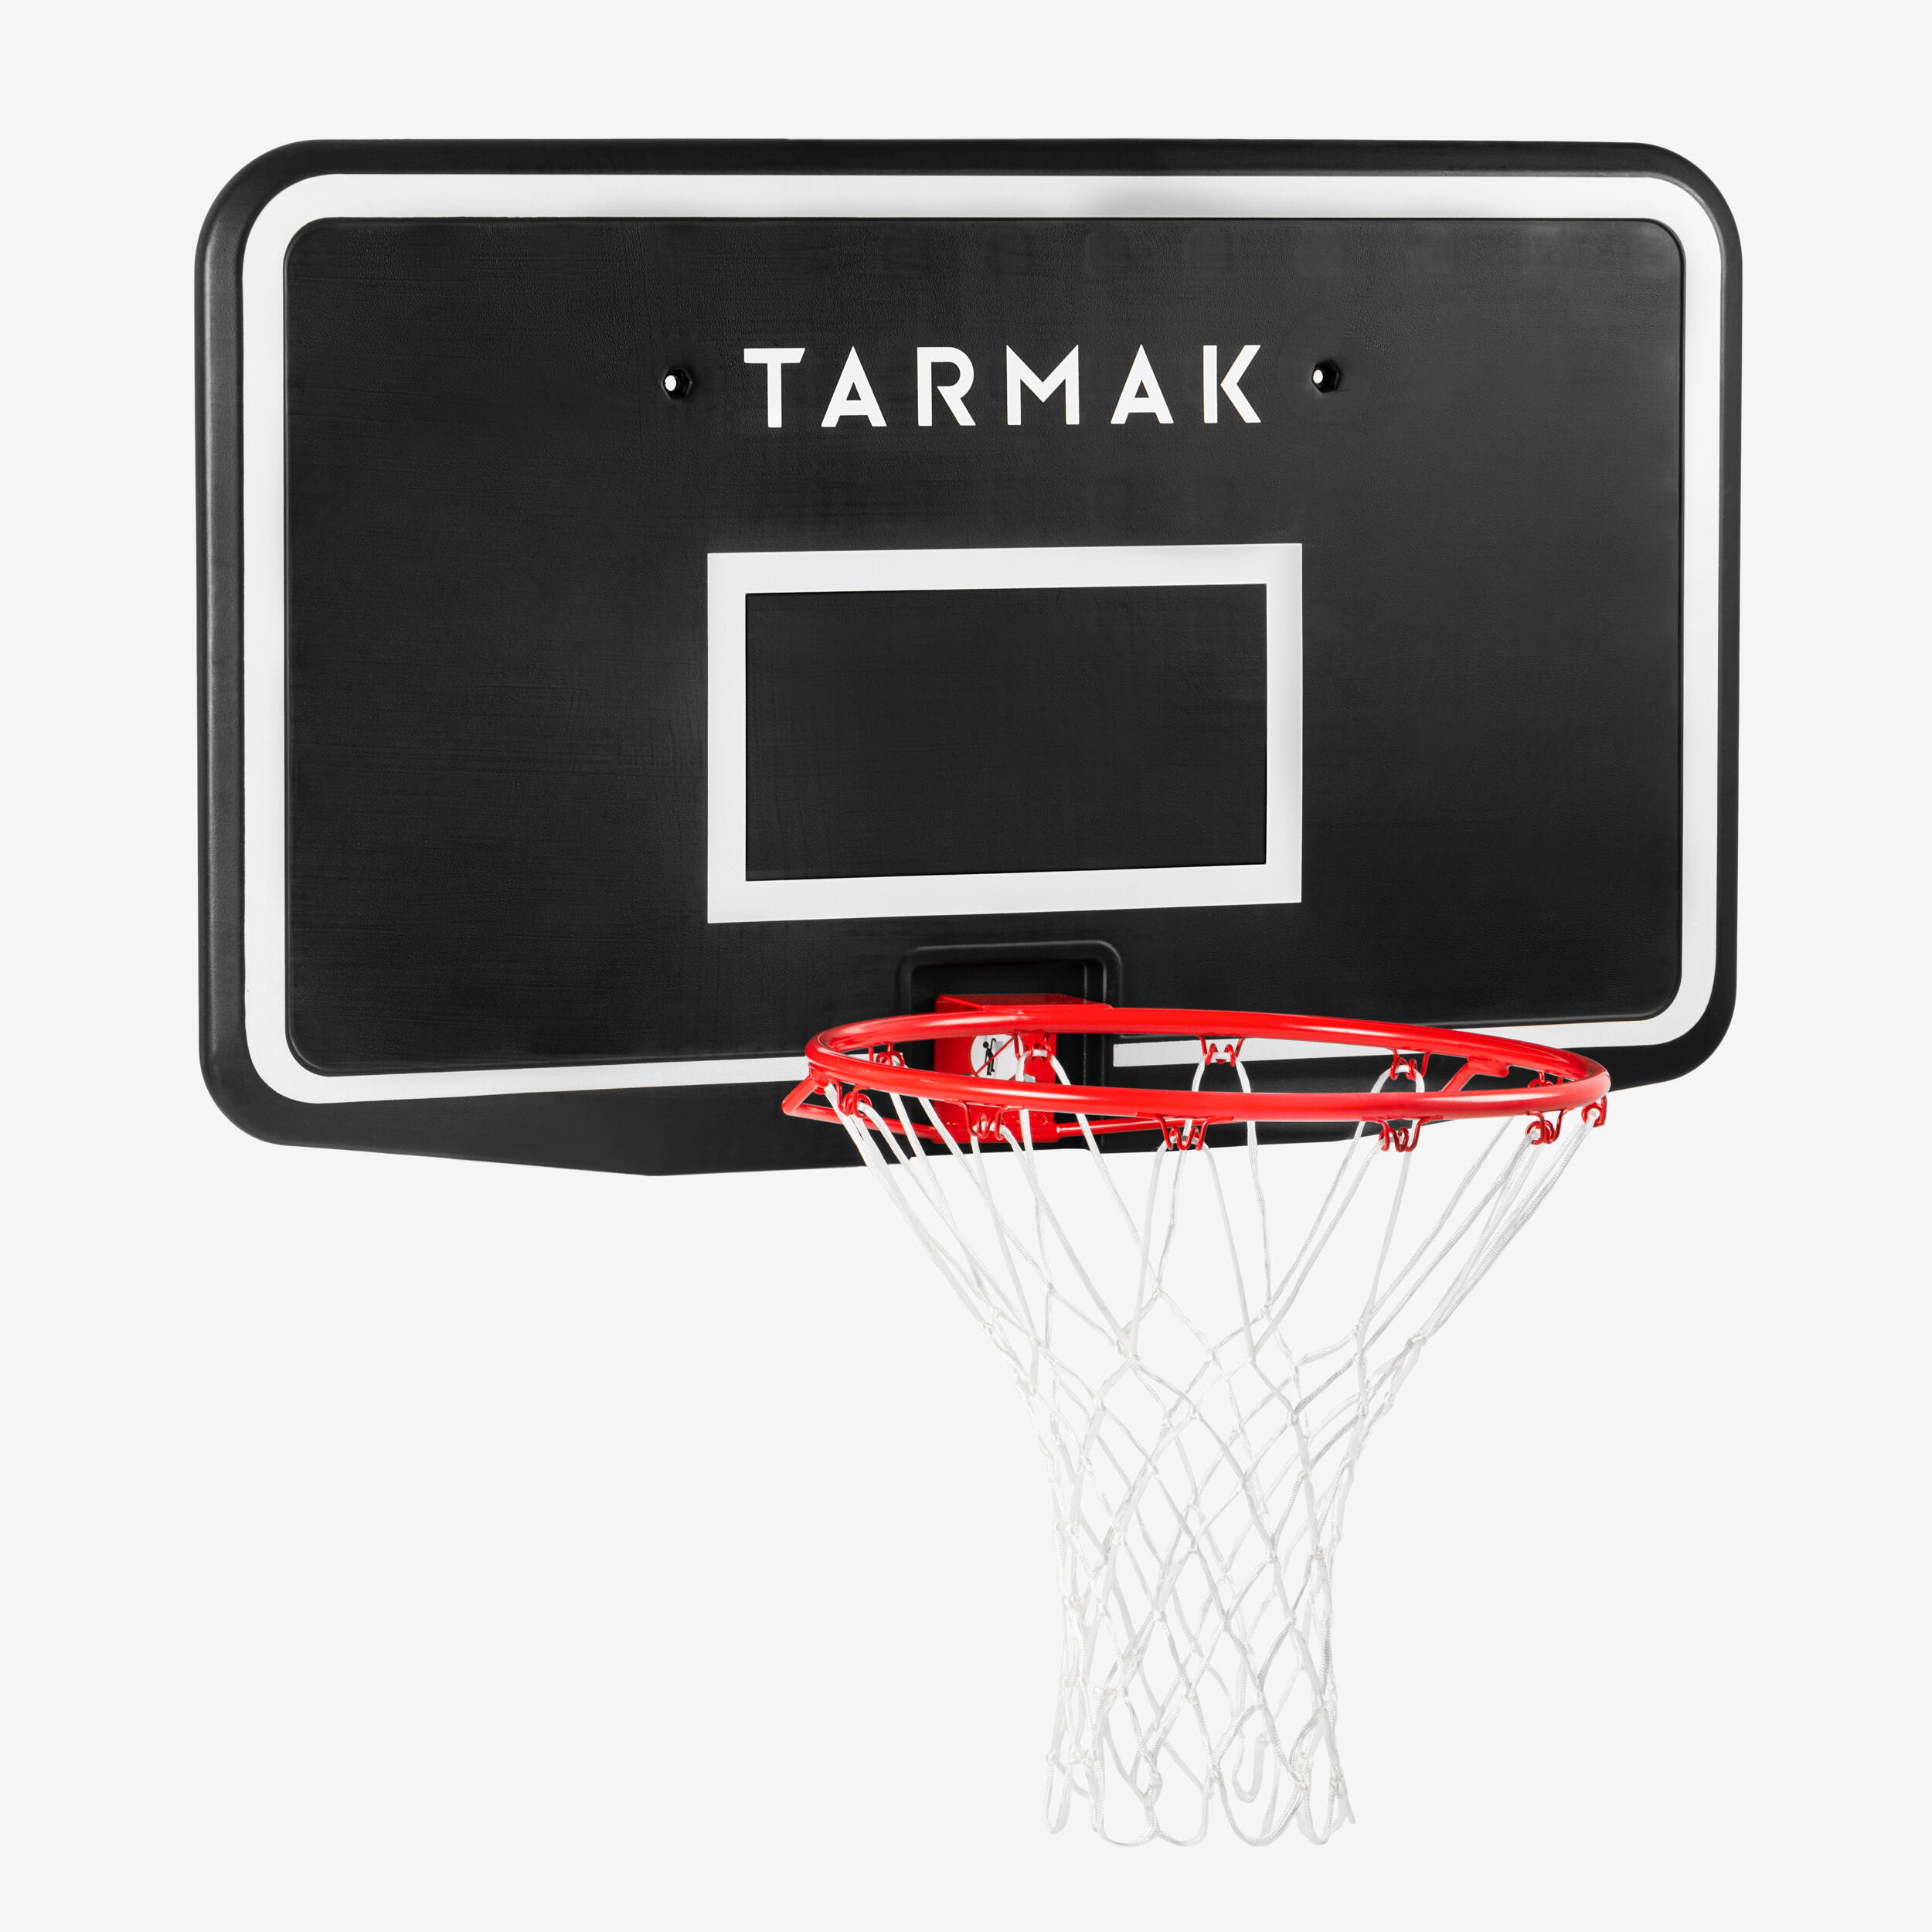 TARMAK Kids'/Adult Wall-Mounted Basketball Hoop SB100 - Black/Red.